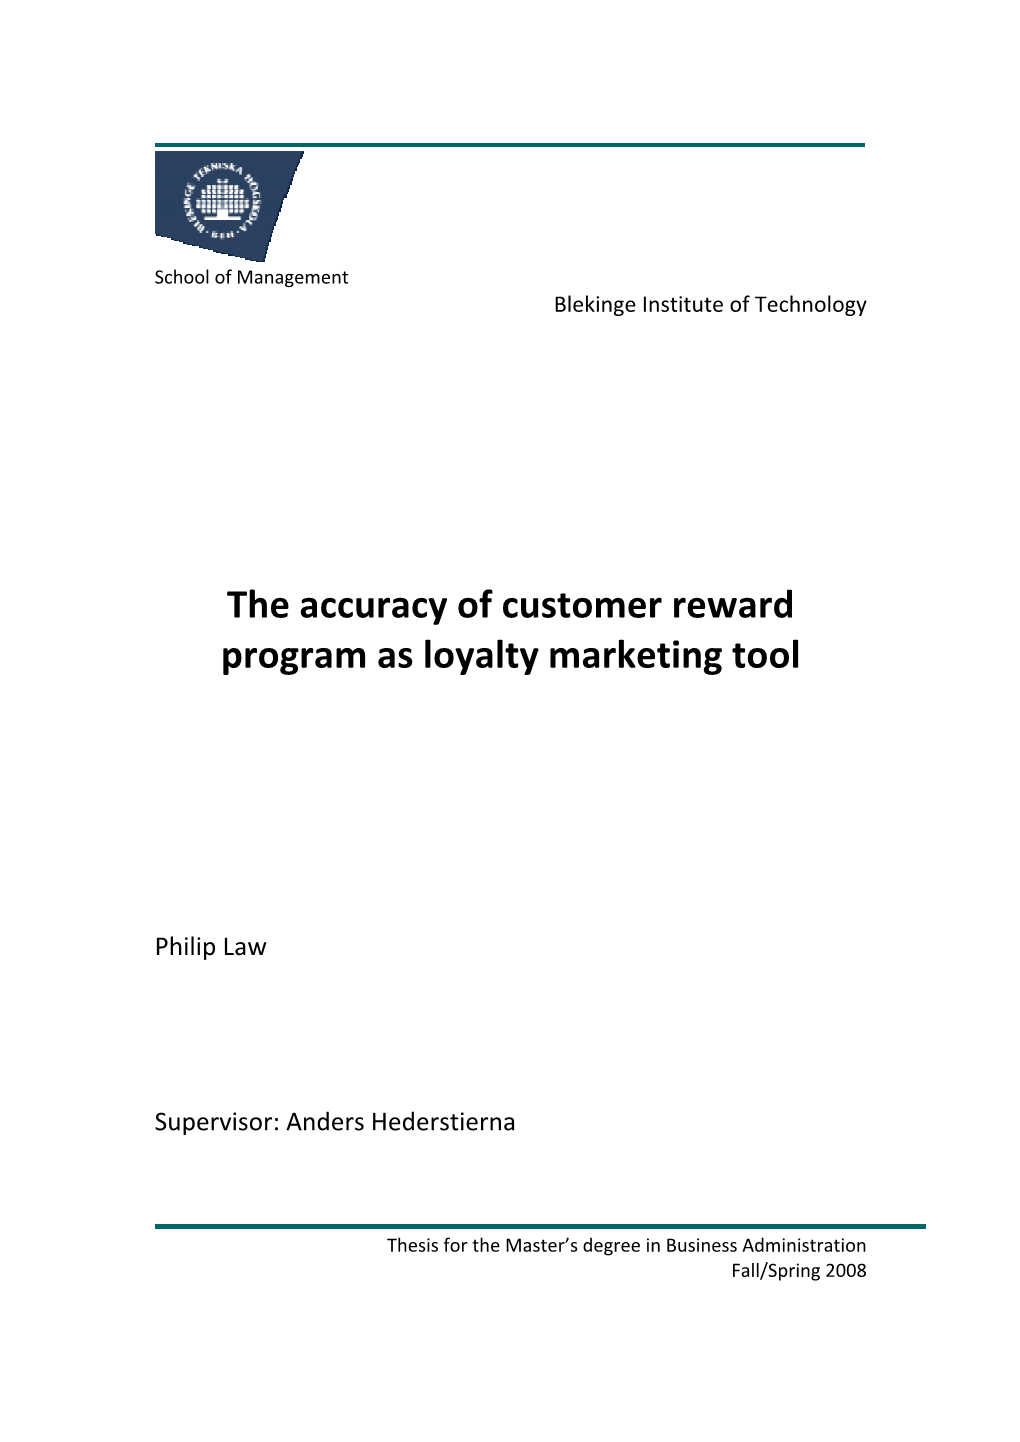 The Accuracy of Customer Reward Program As Loyalty Marketing Tool